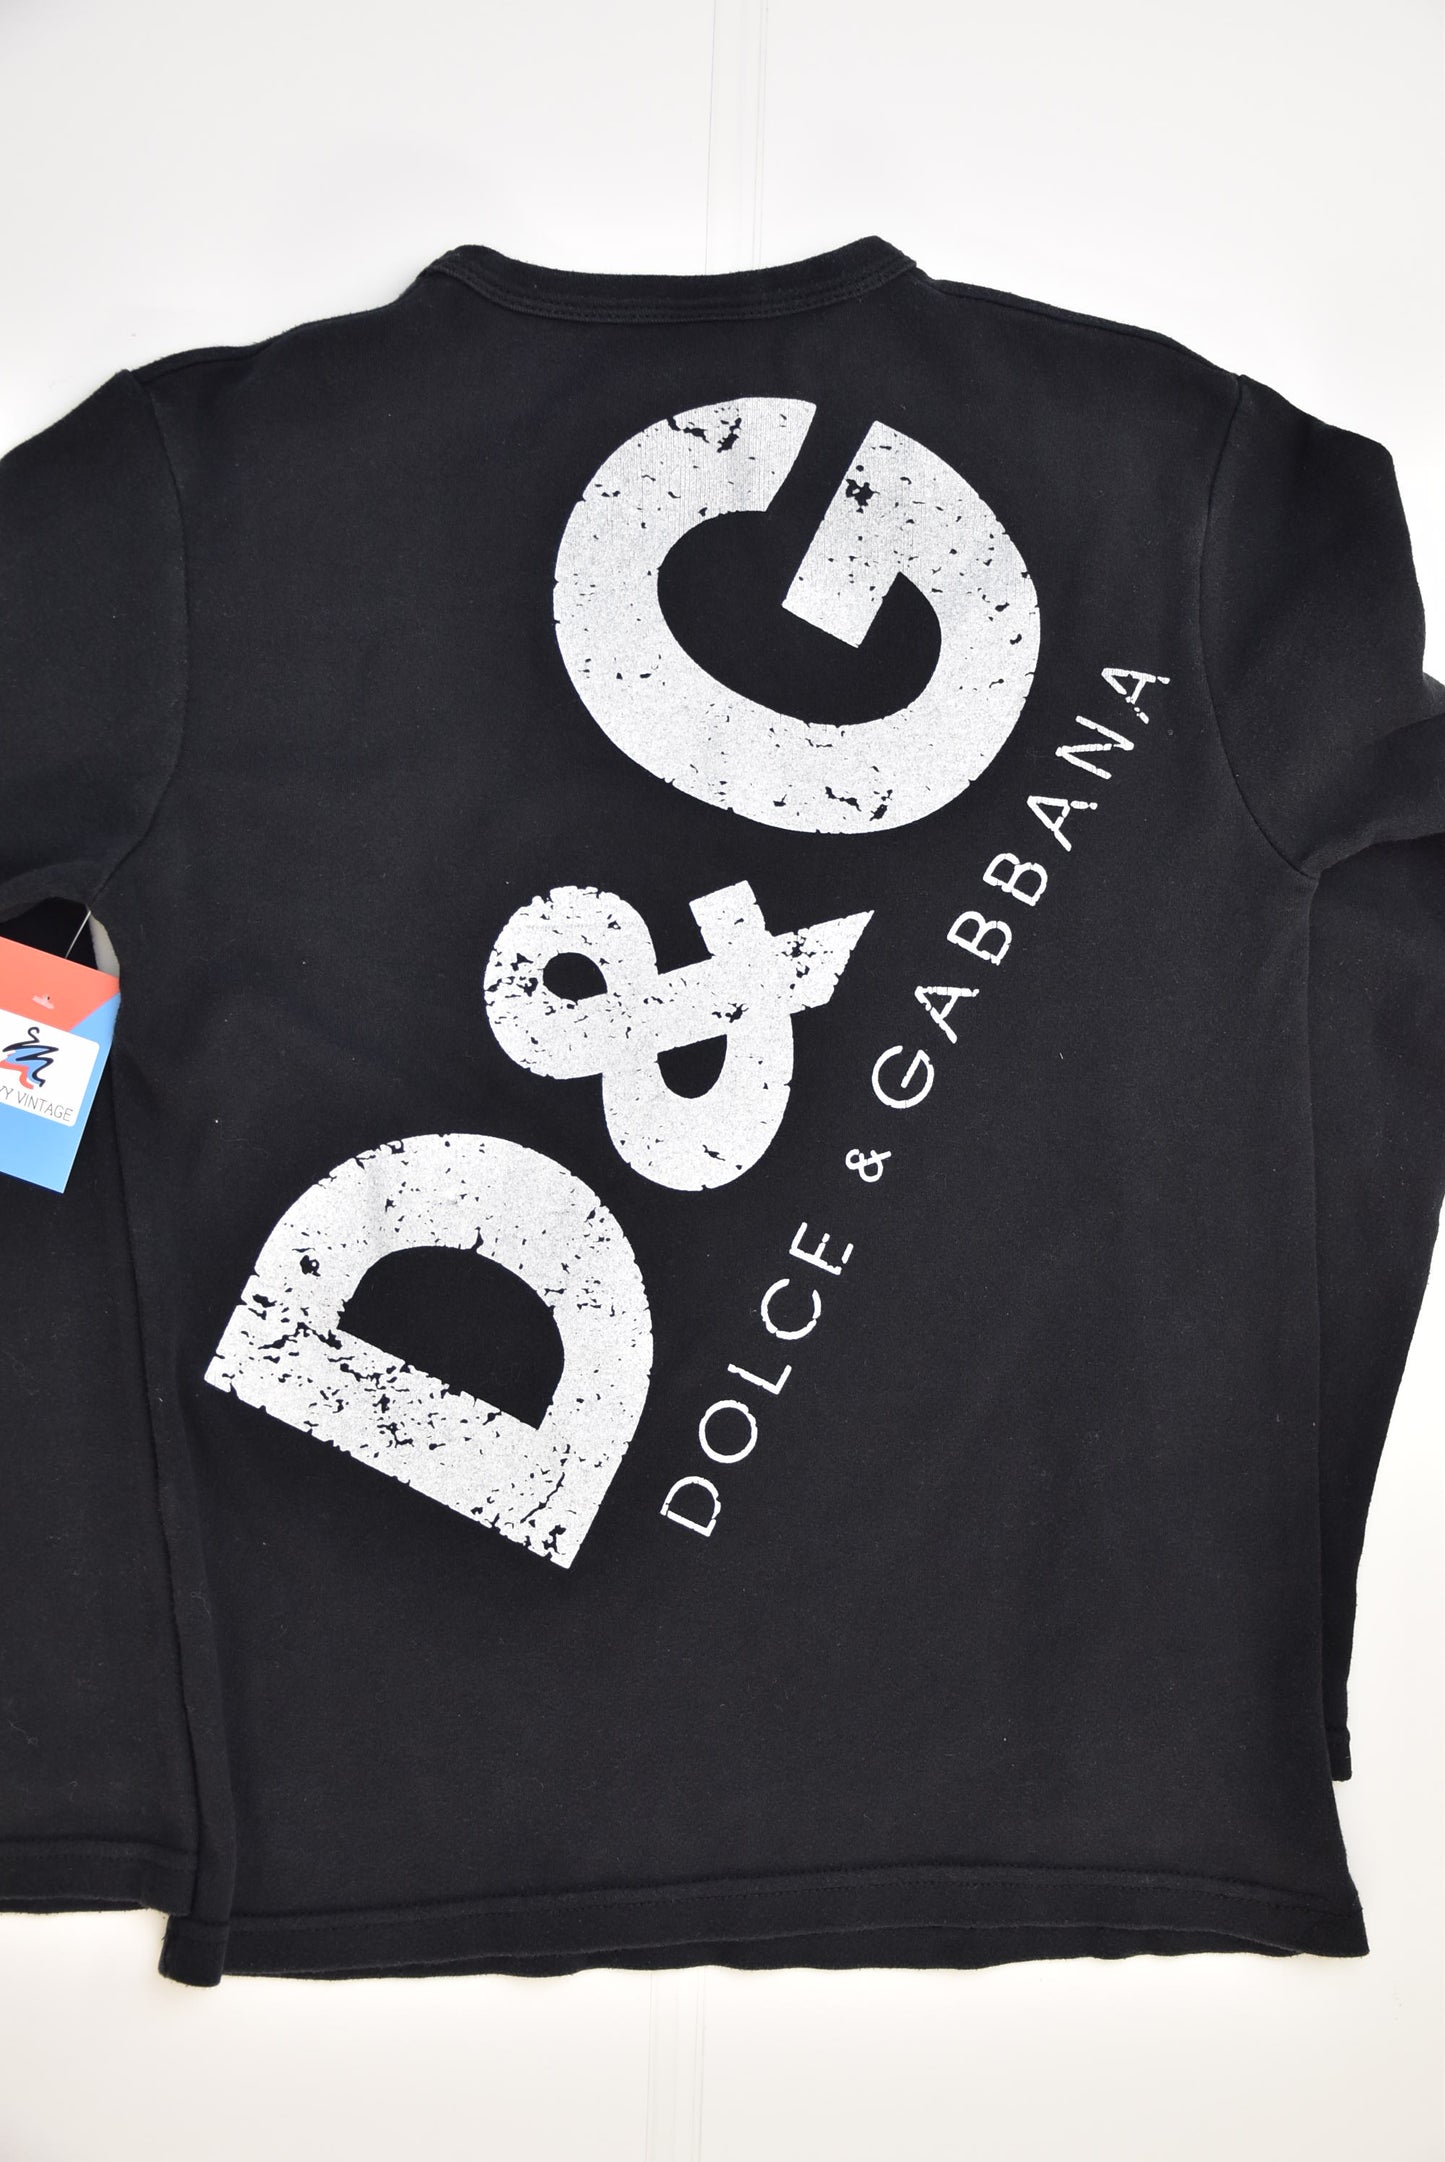 Bootleg Dolce and Gabbana T-shirt (Women's UK 10)